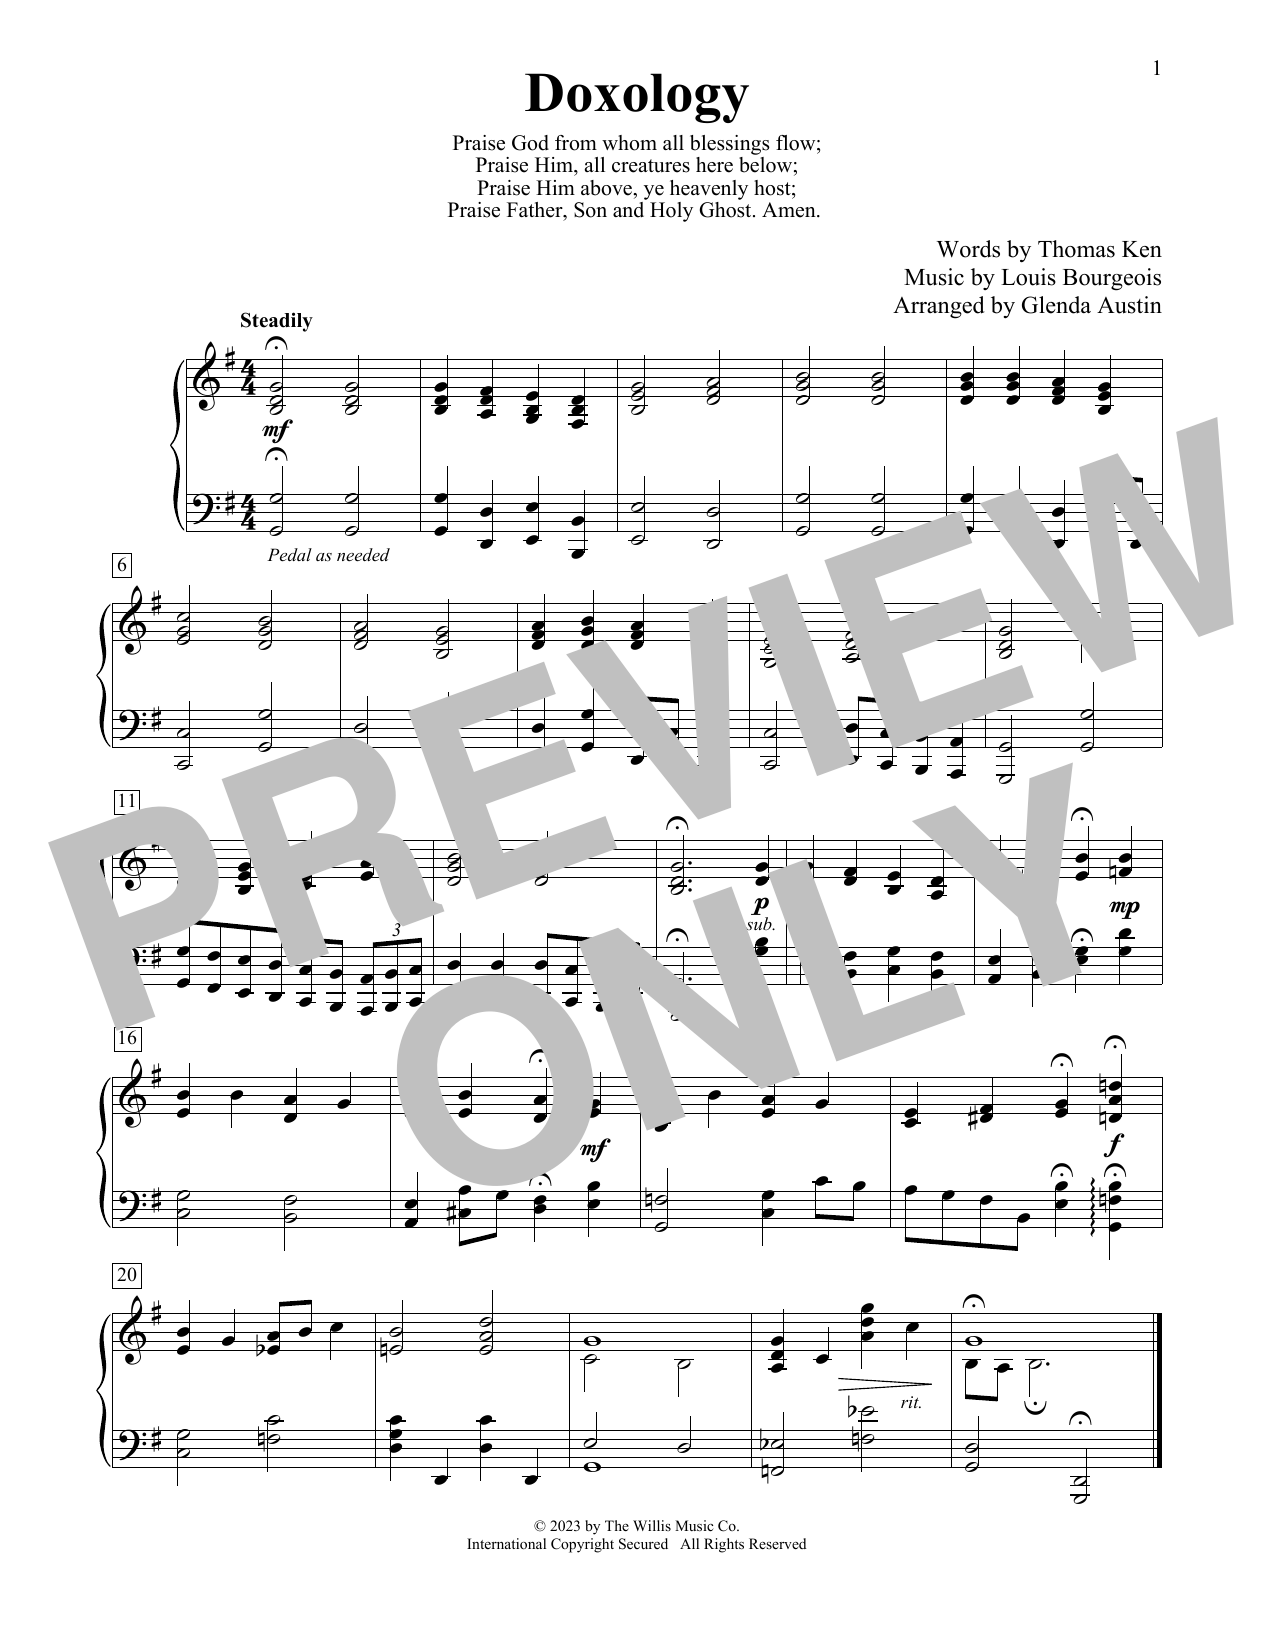 Thomas Ken Doxology (arr. Glenda Austin) Sheet Music Notes & Chords for Educational Piano - Download or Print PDF